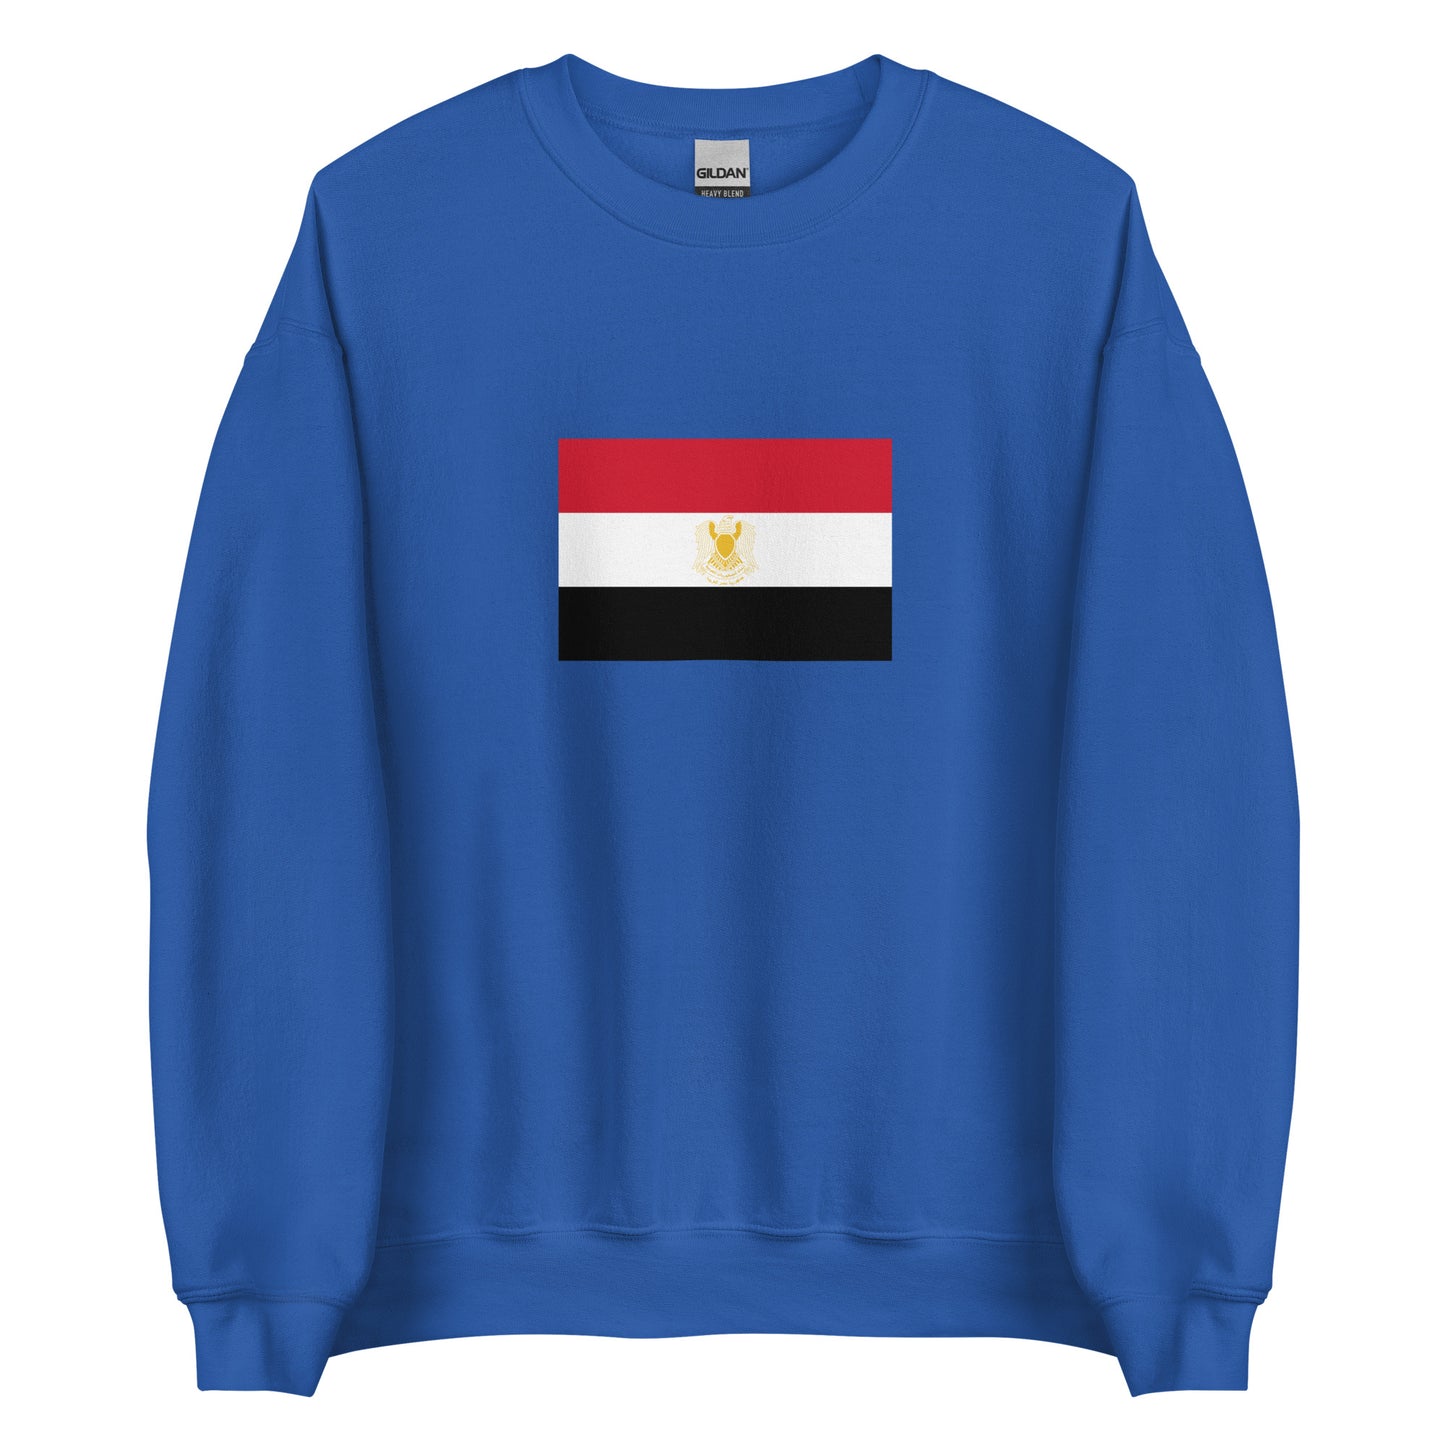 Egypt - Federation of Arab Republics (1972-1977) | Egypt Flag Interactive History Sweatshirt